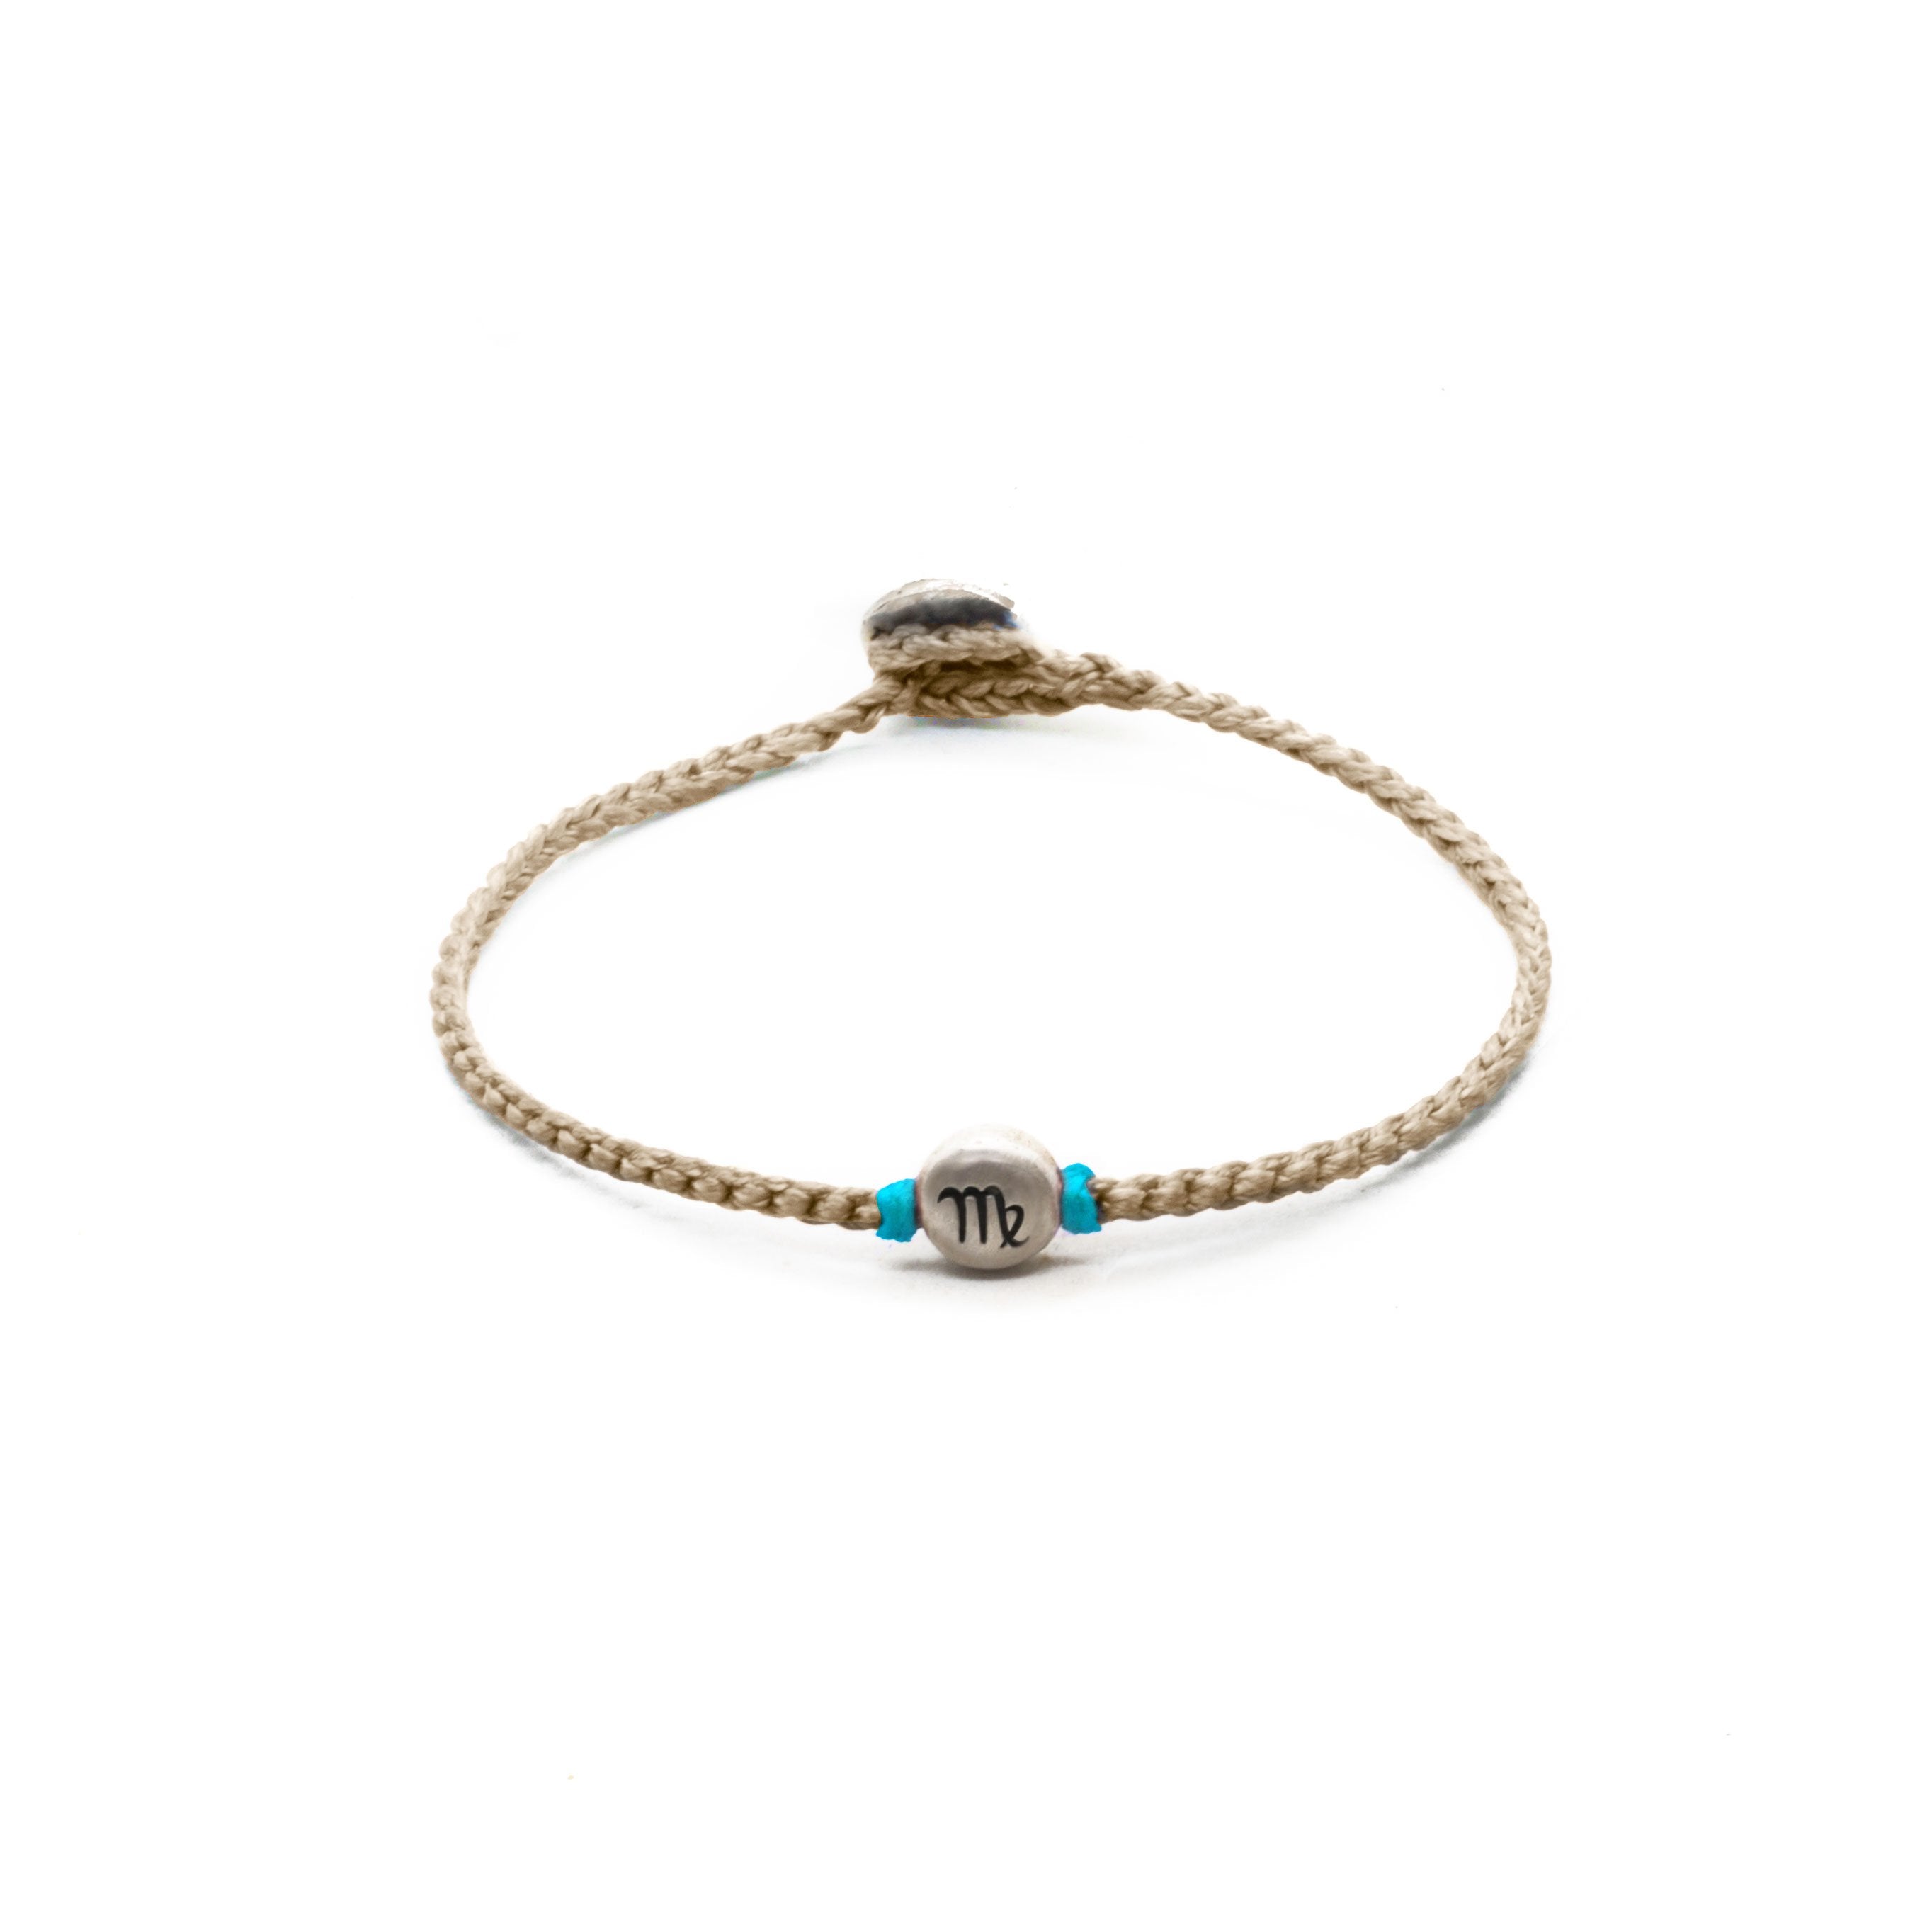 Silver Virgo zodiac sign bracelet with beige hand braided chain.